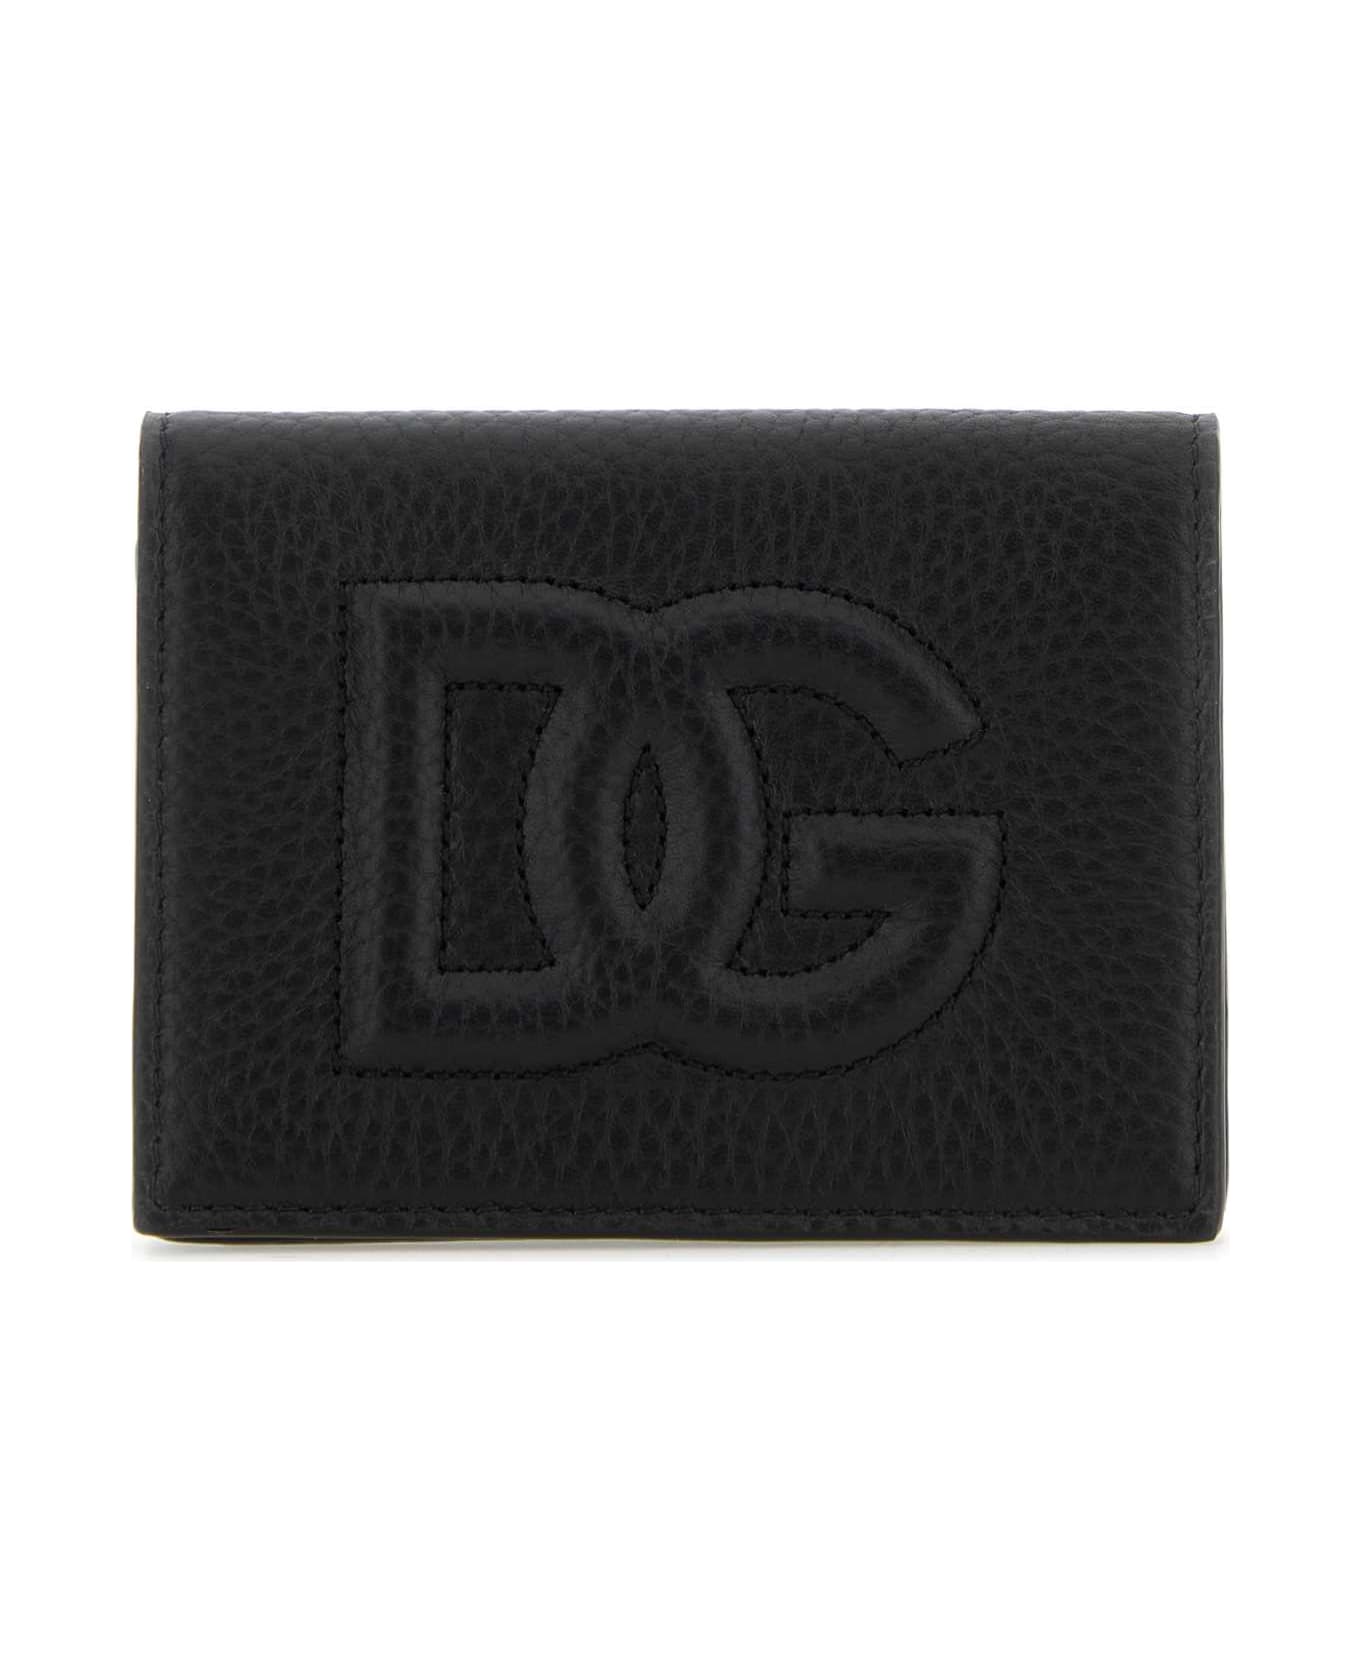 Dolce & Gabbana Black Leather Wallet - NERO